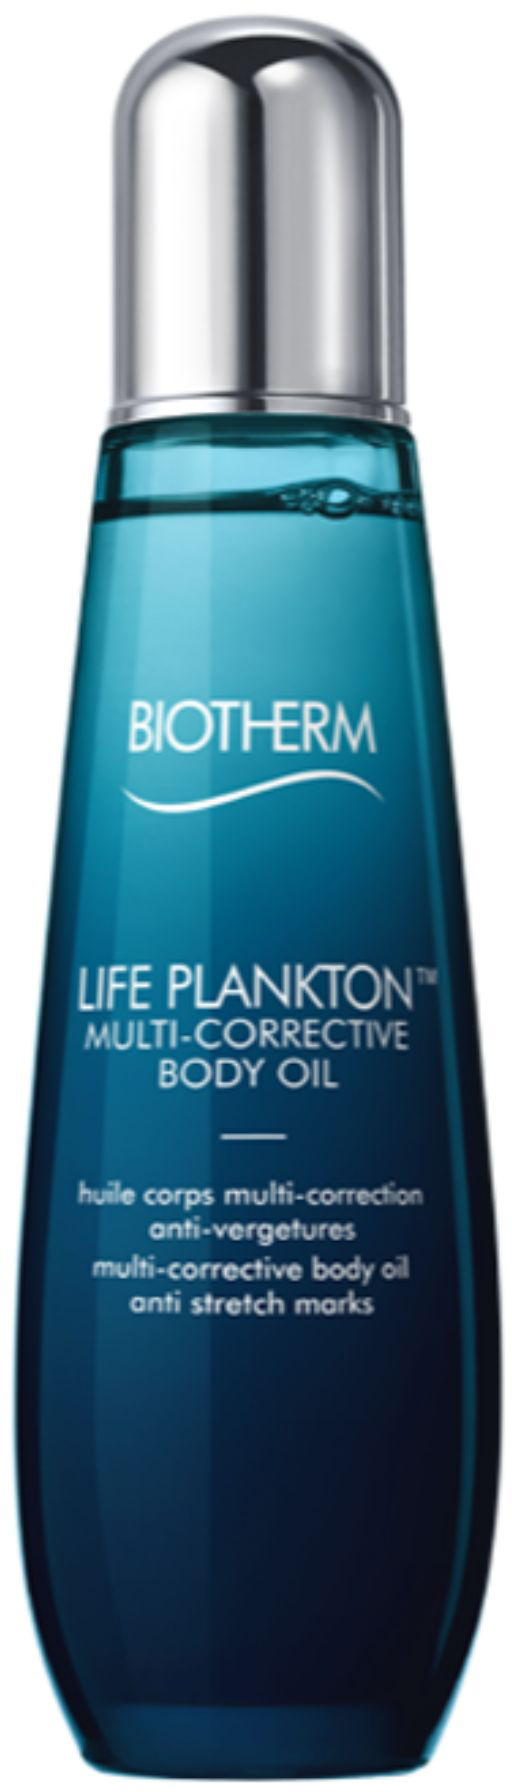 Biotherm Body Oil